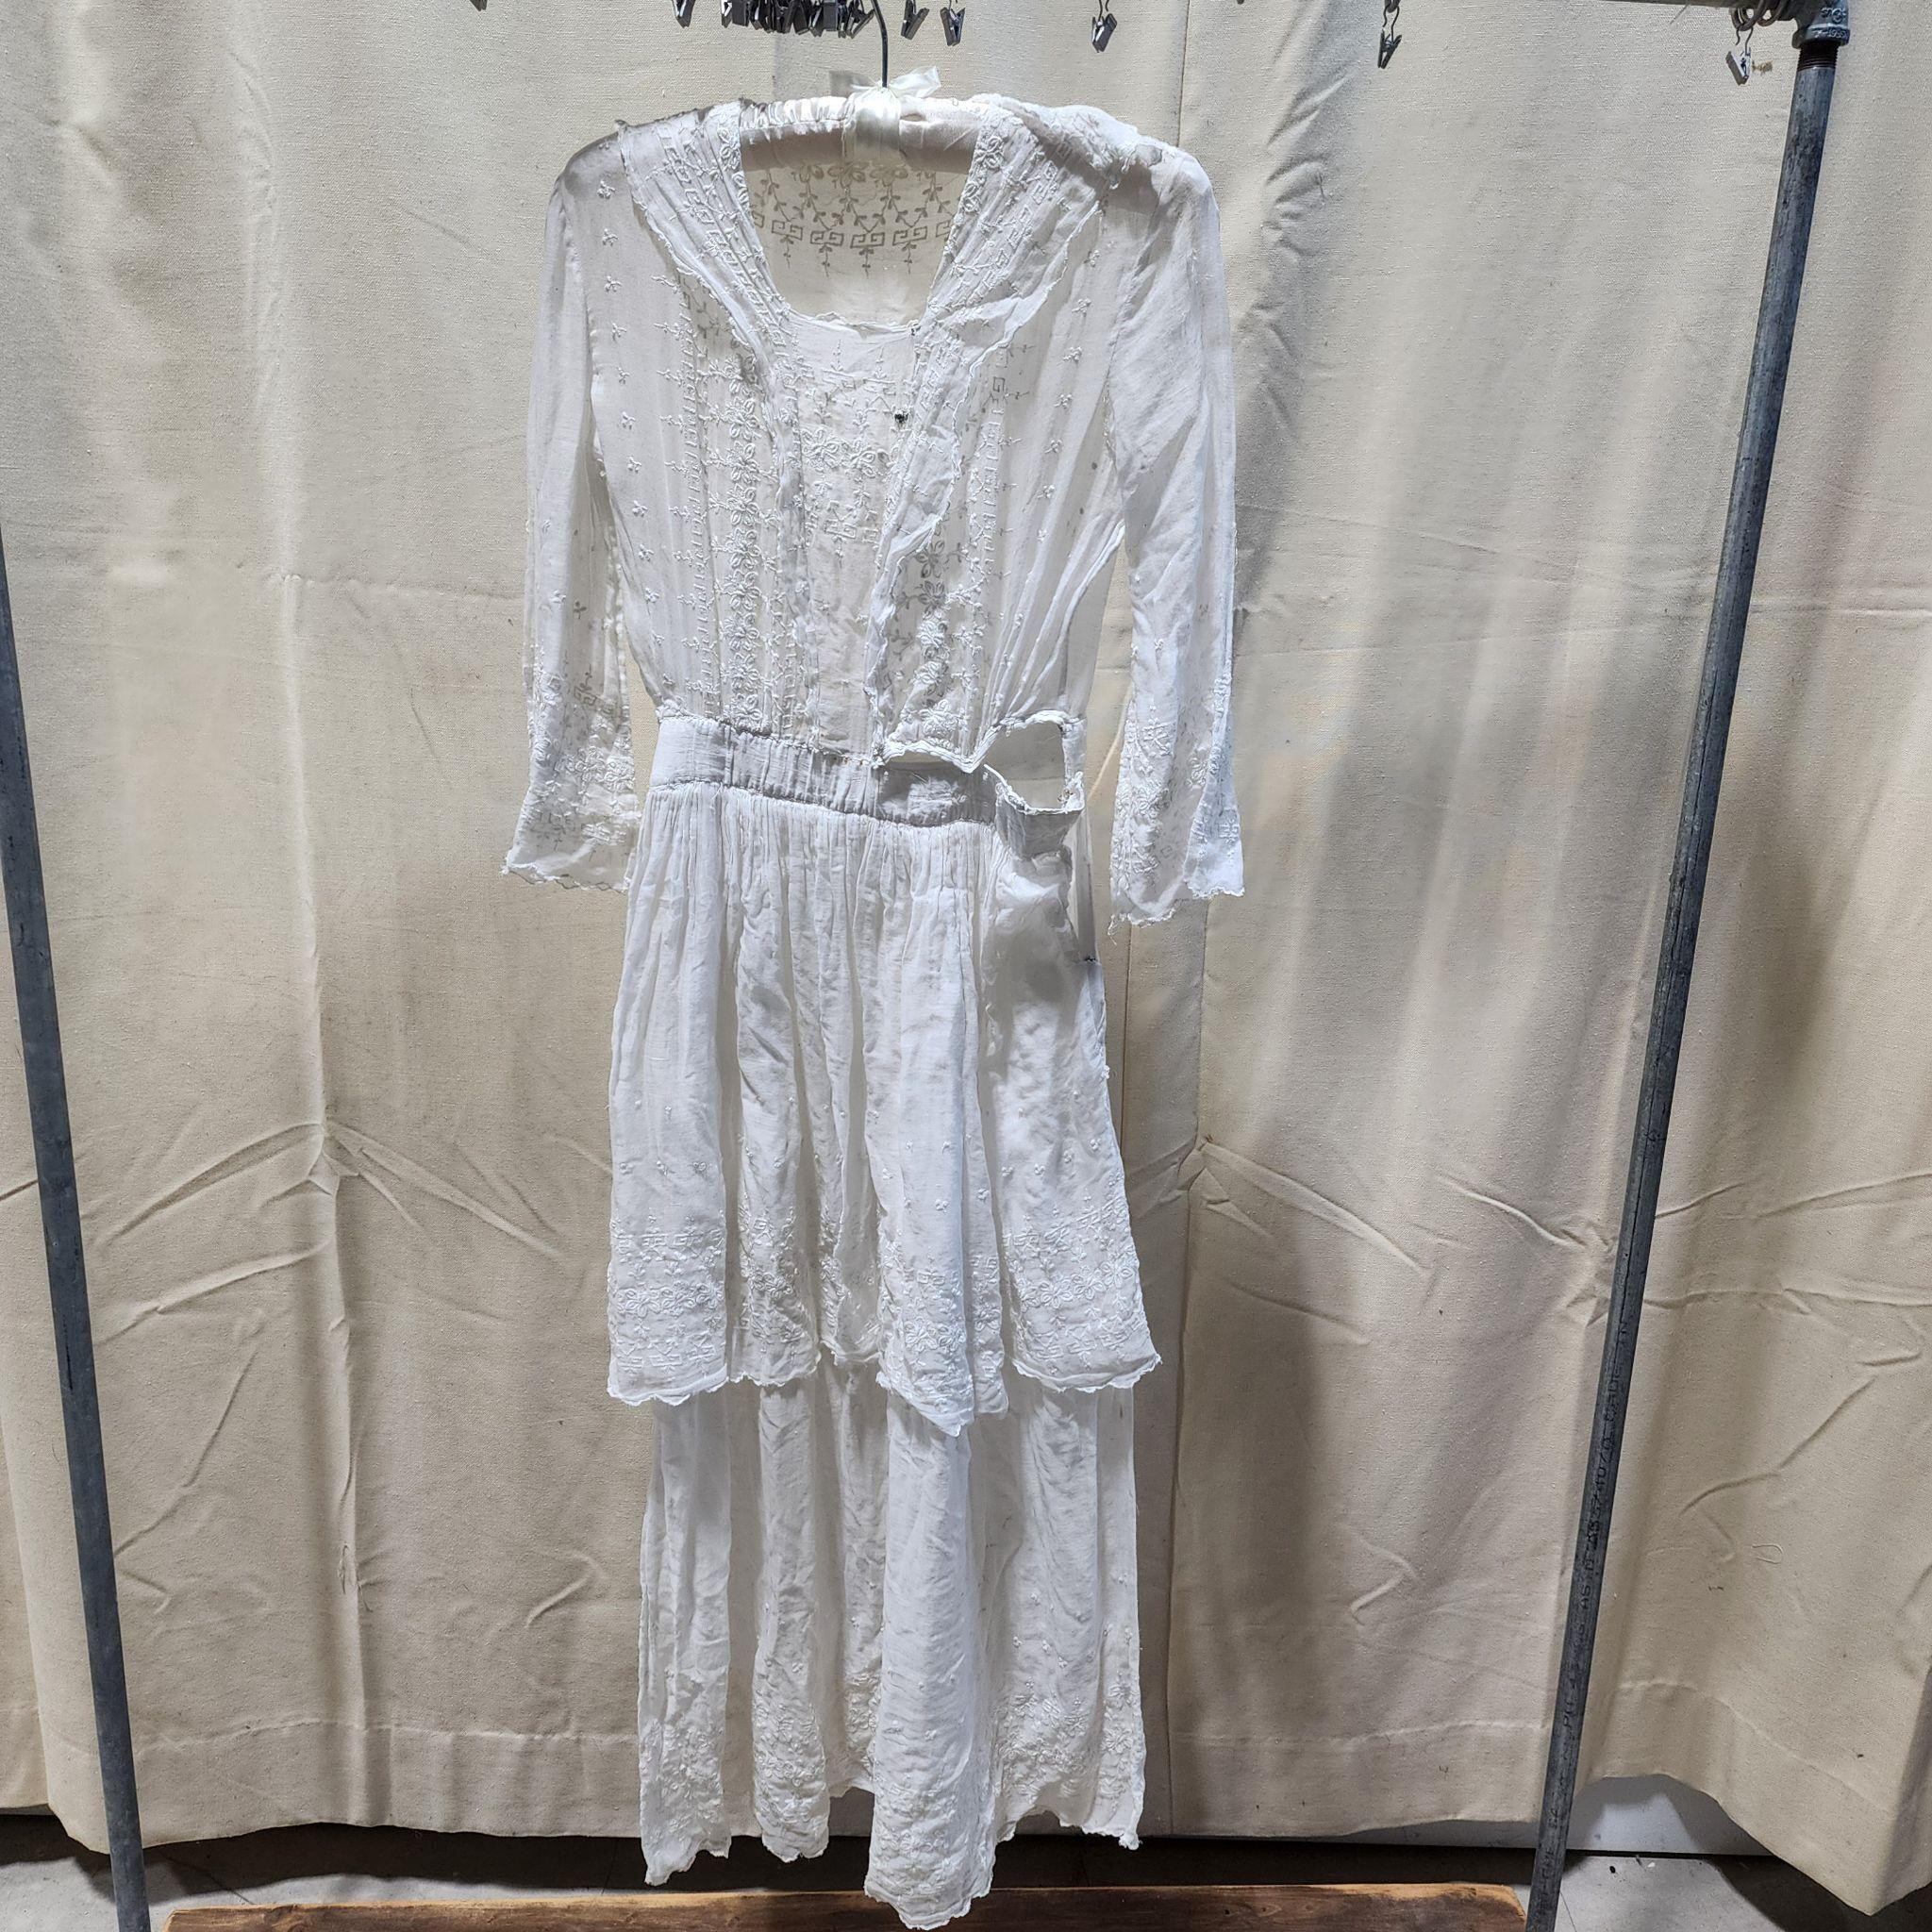 Antique white dress